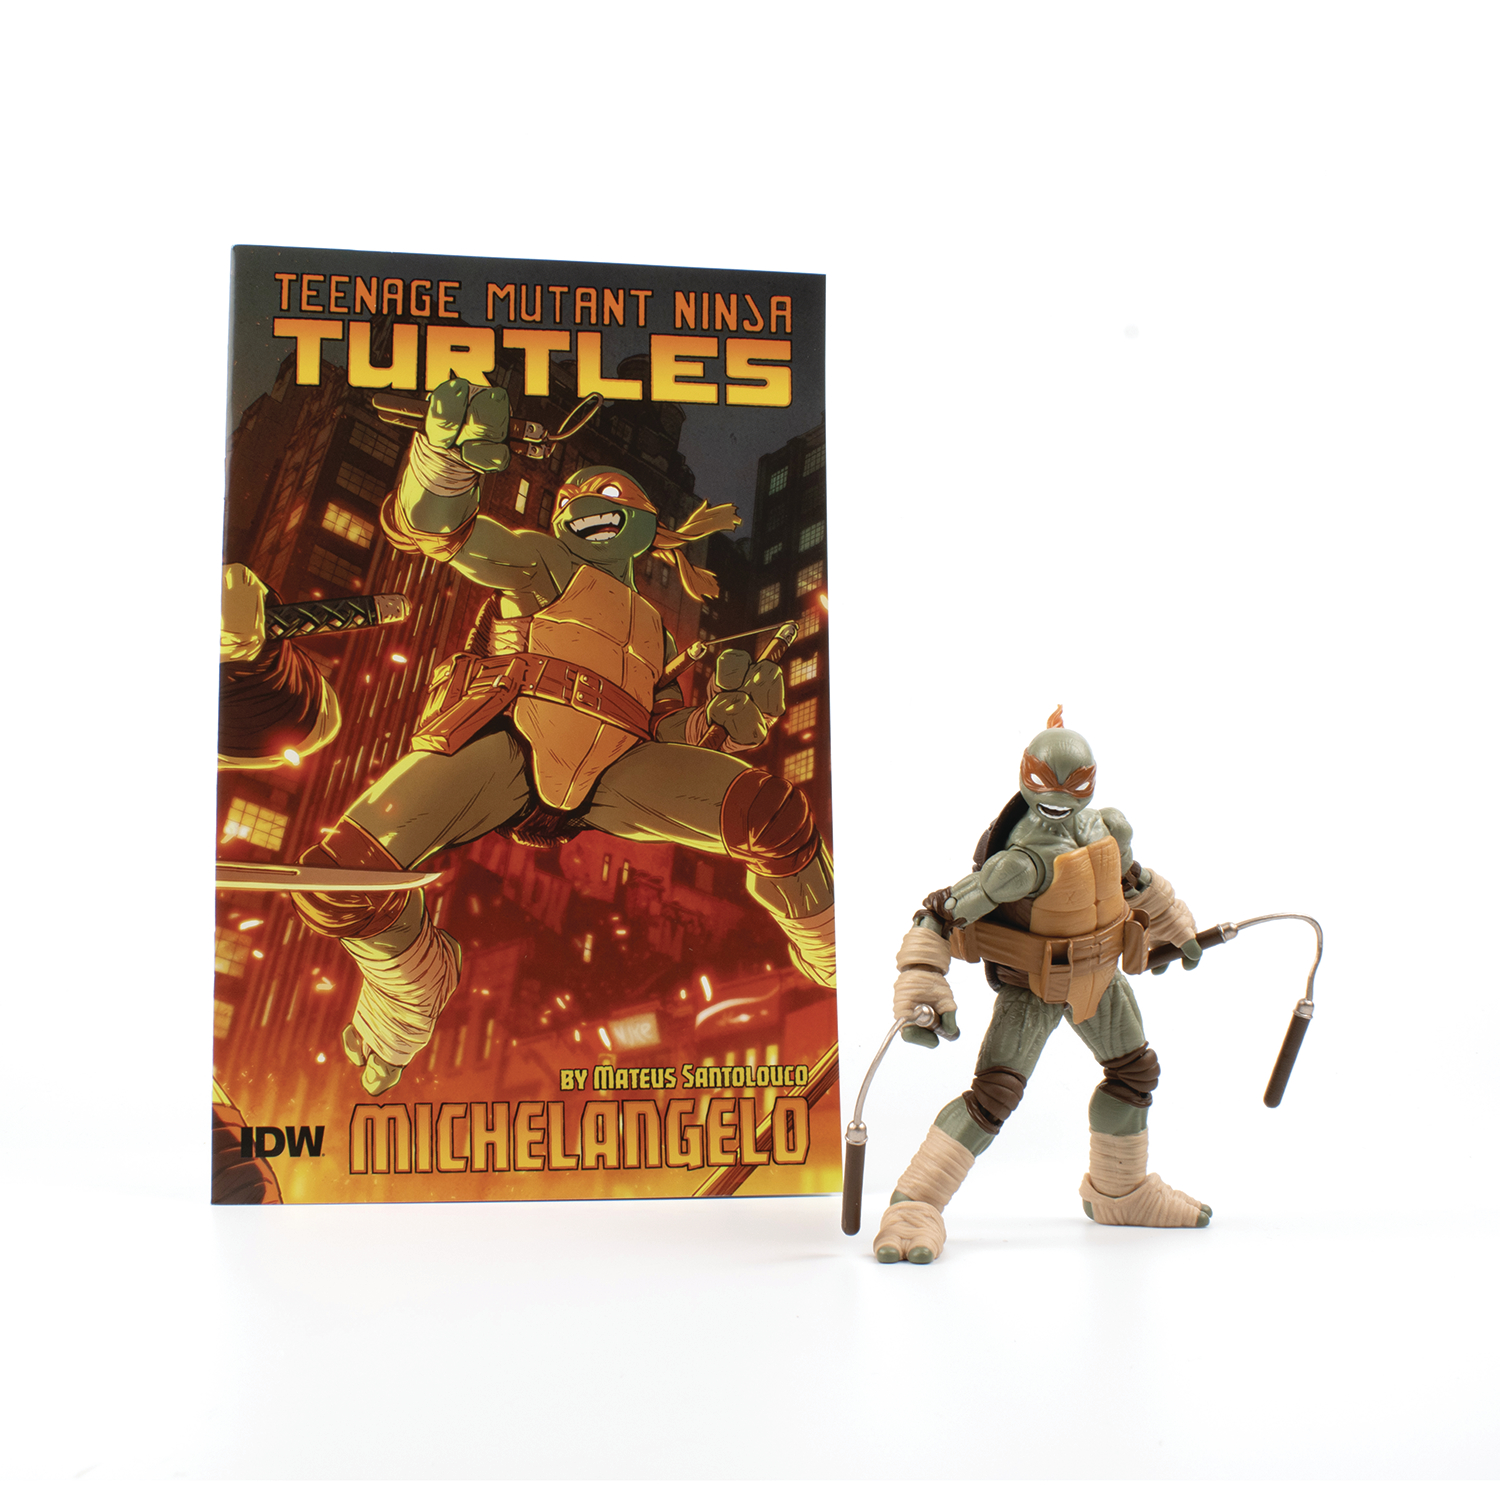 Teenage Mutant Ninja Turtles Michelangelo V2 Idw Comic Book & Bst Axn 5in Action Figure 